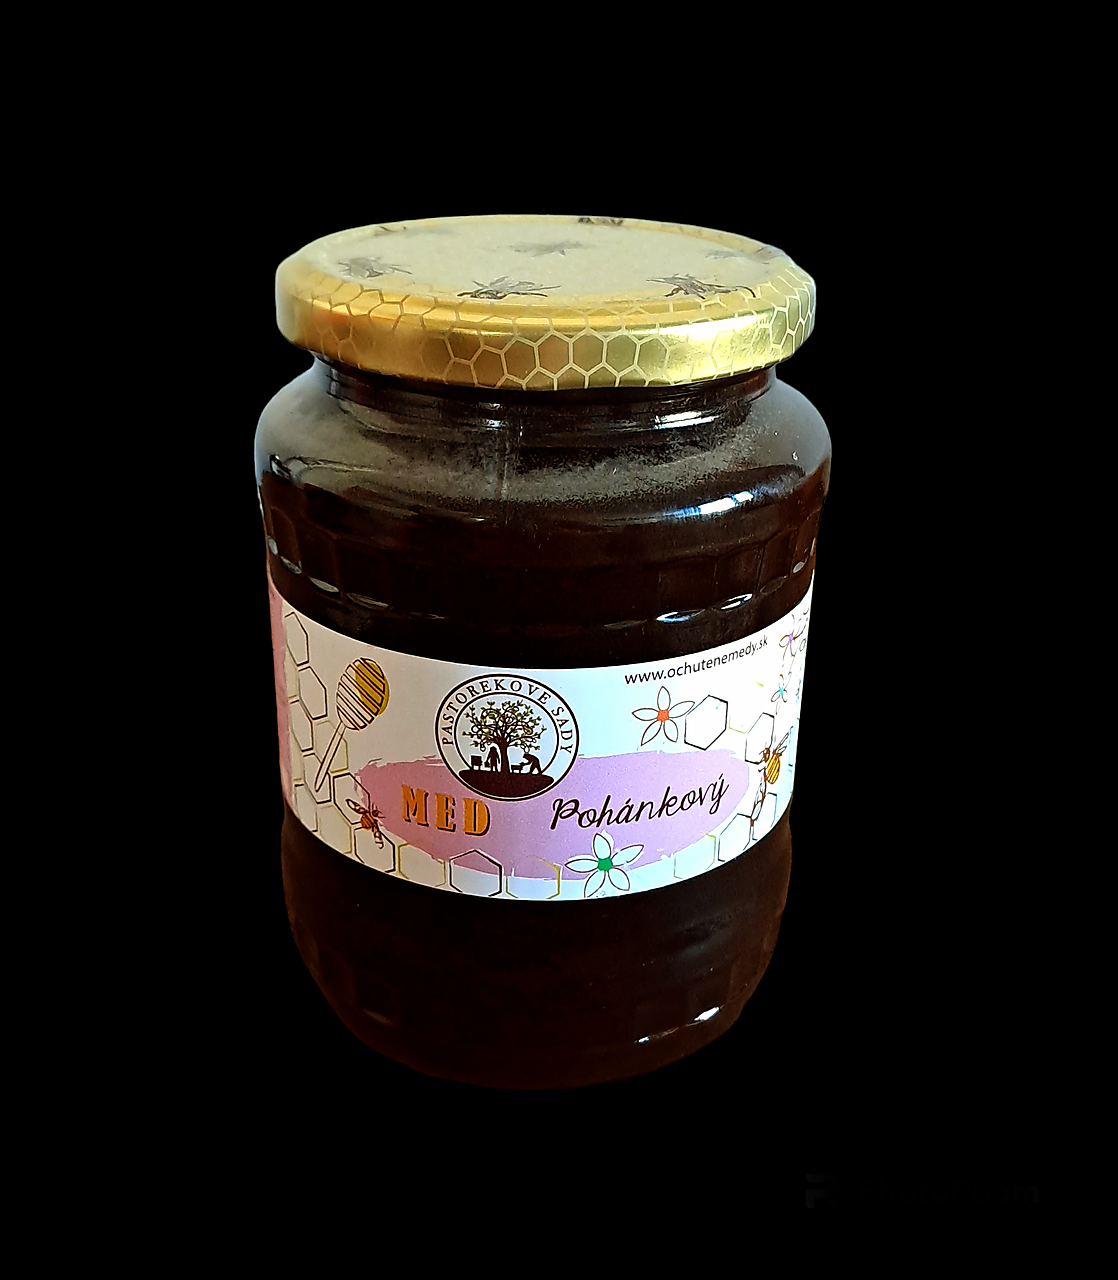 Pohánkový med